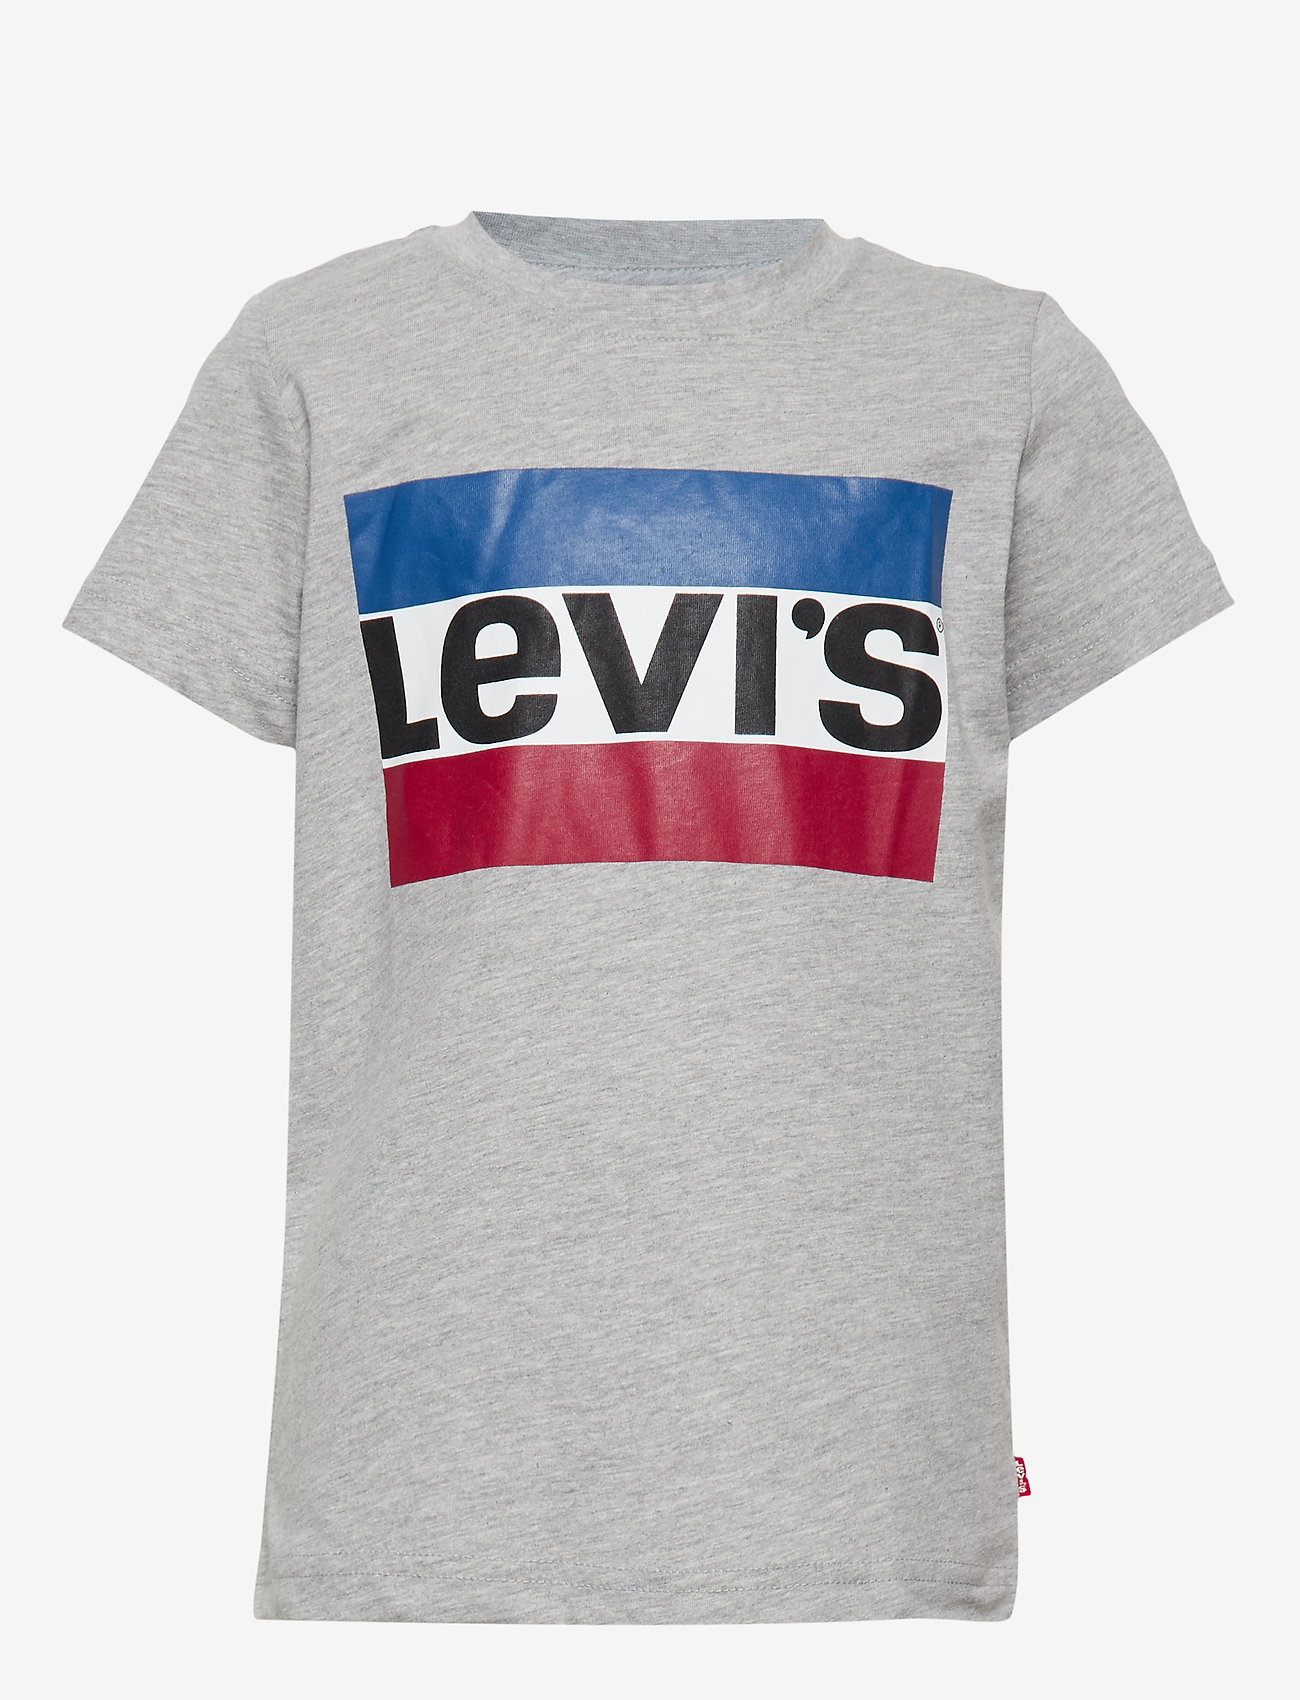 Levi's - Levi's® Long Sleeve Graphic Tee Shirt - kortärmade t-shirts - peche - 0